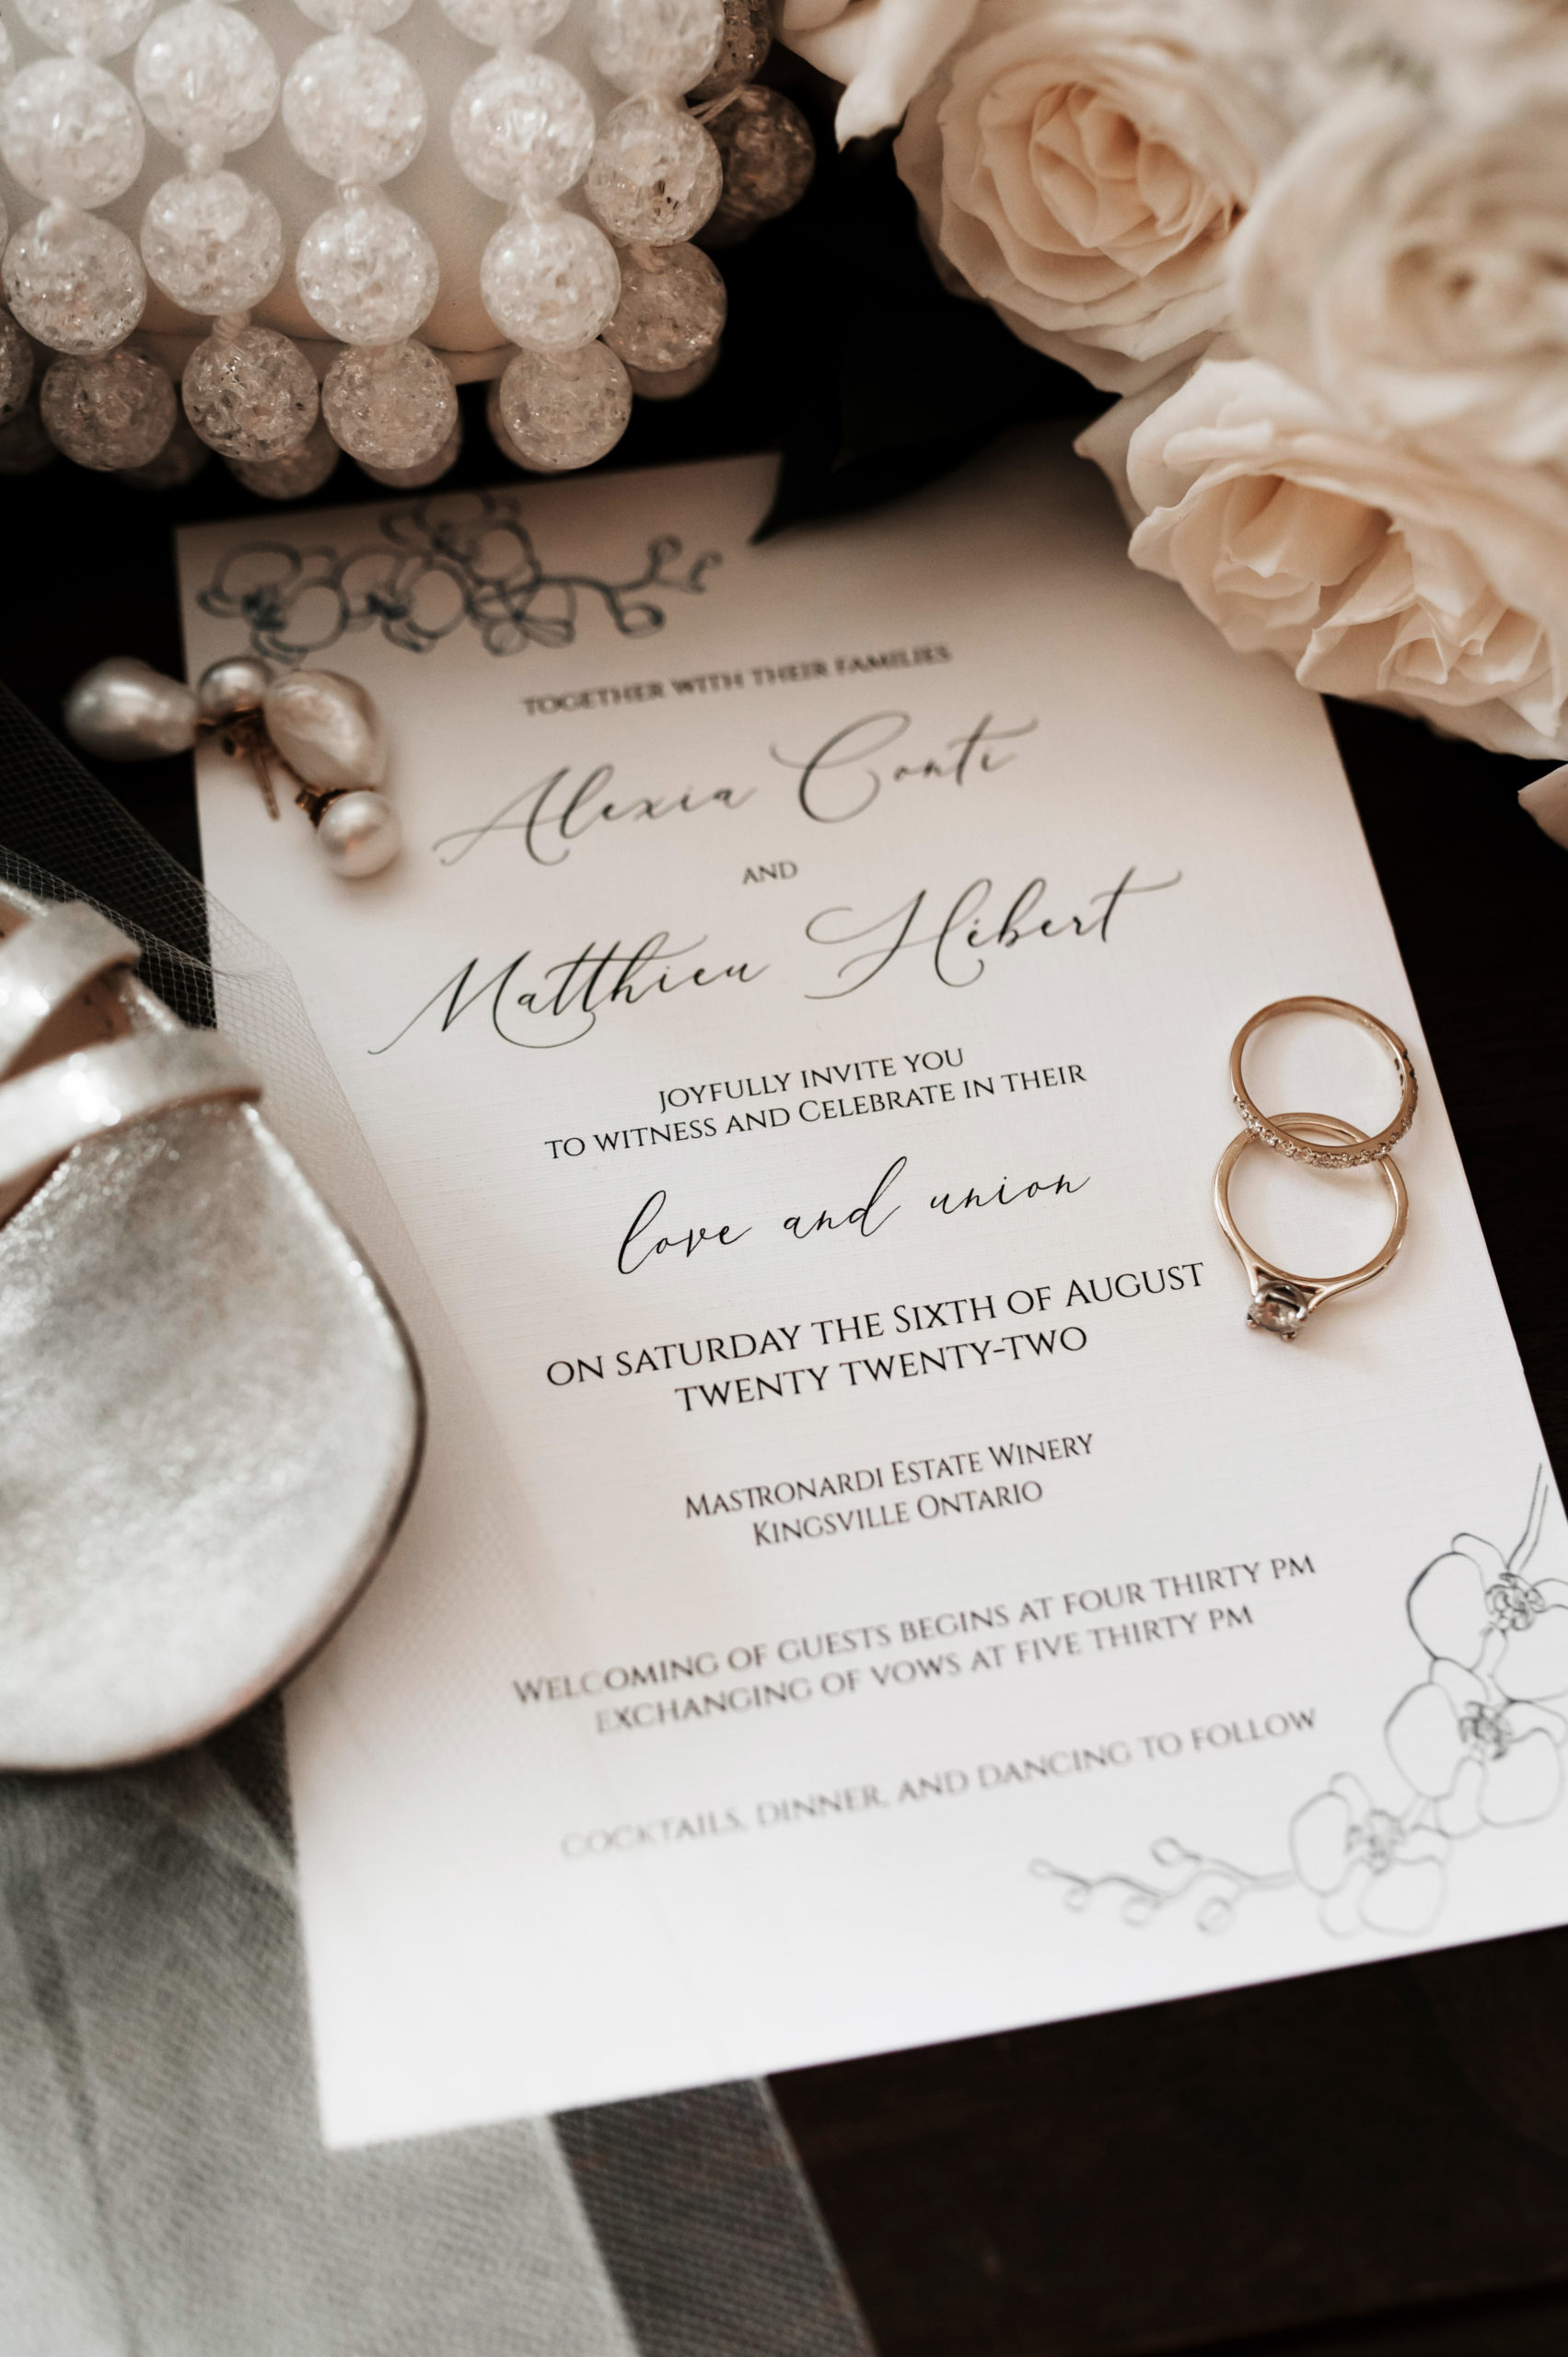 Wedding invitation details at Mastronardi estate winery